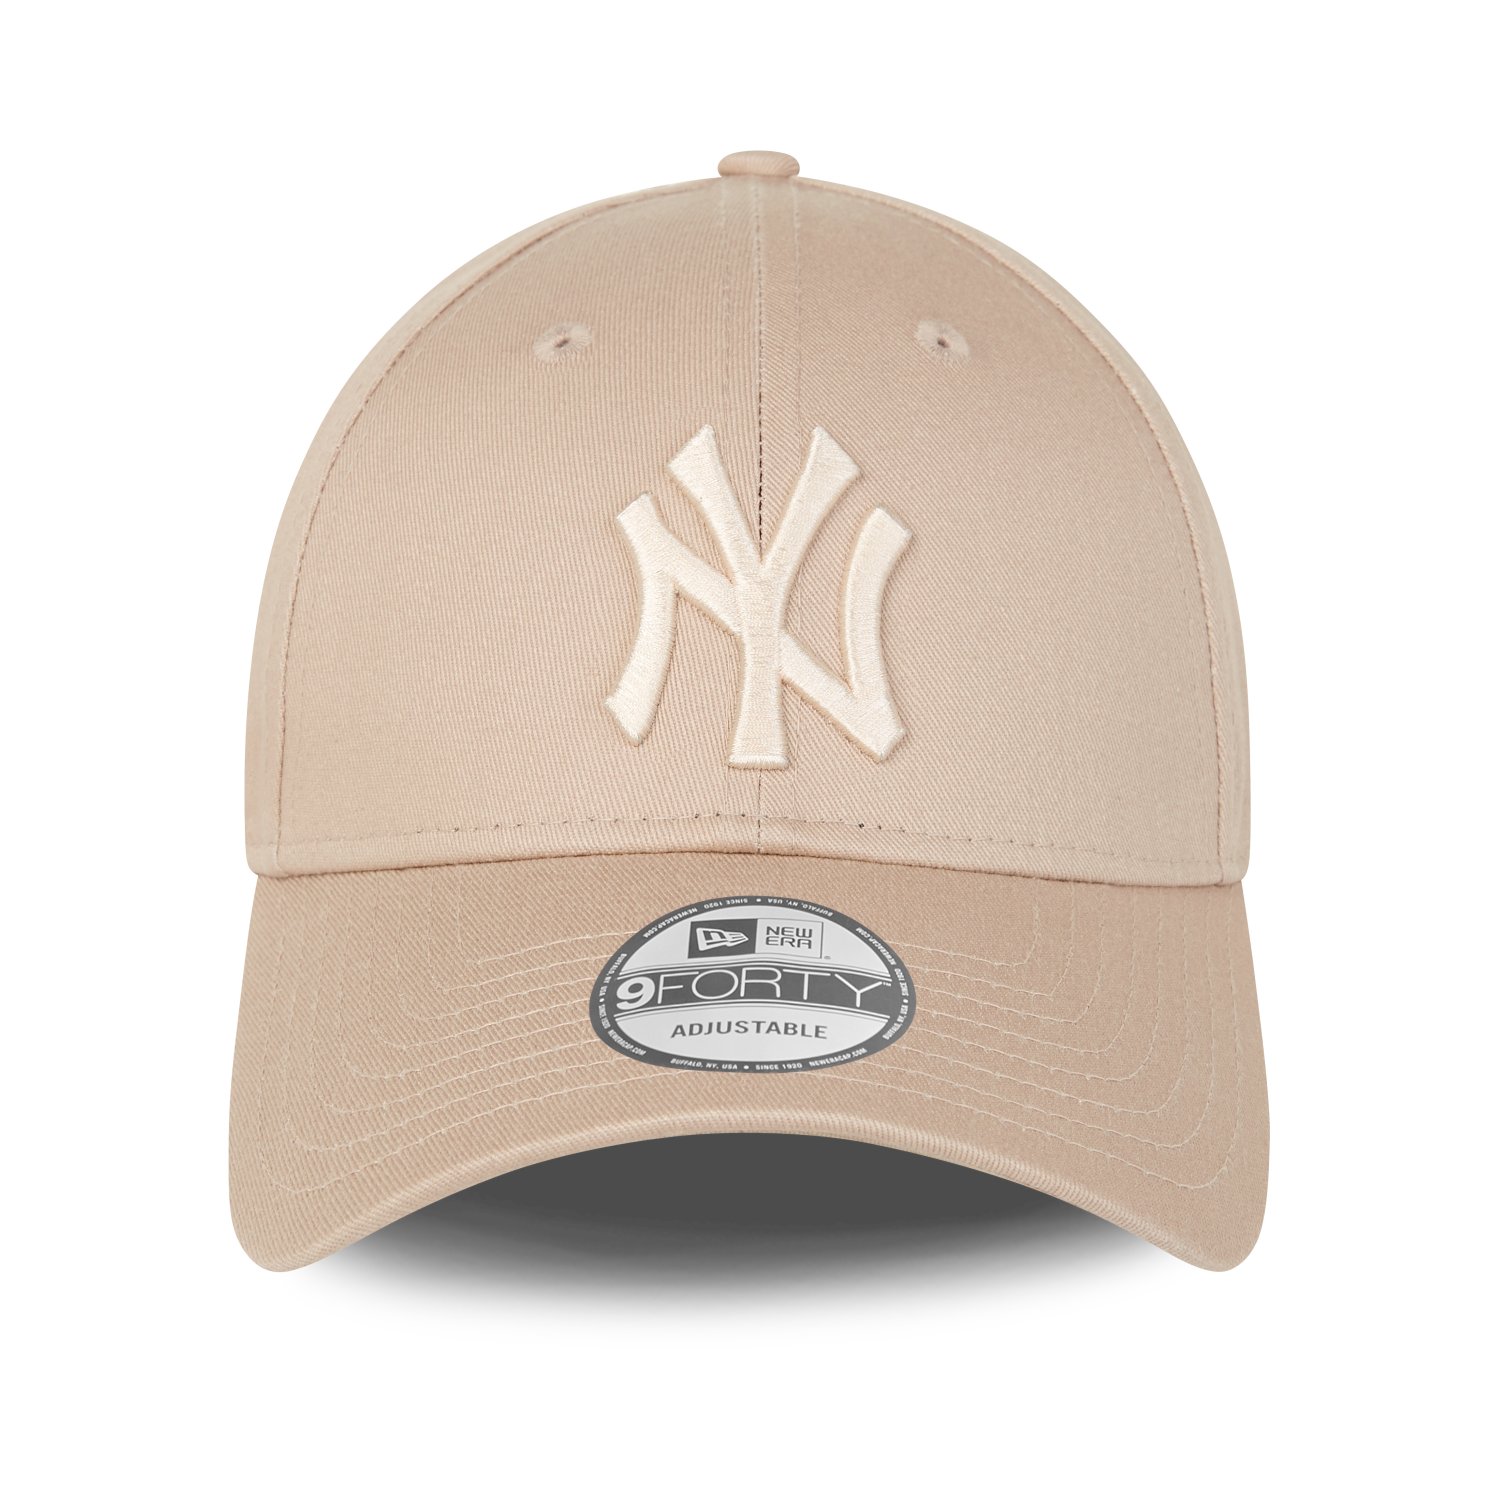 New Era 9Forty Strapback Cap - New York Yankees camel beige